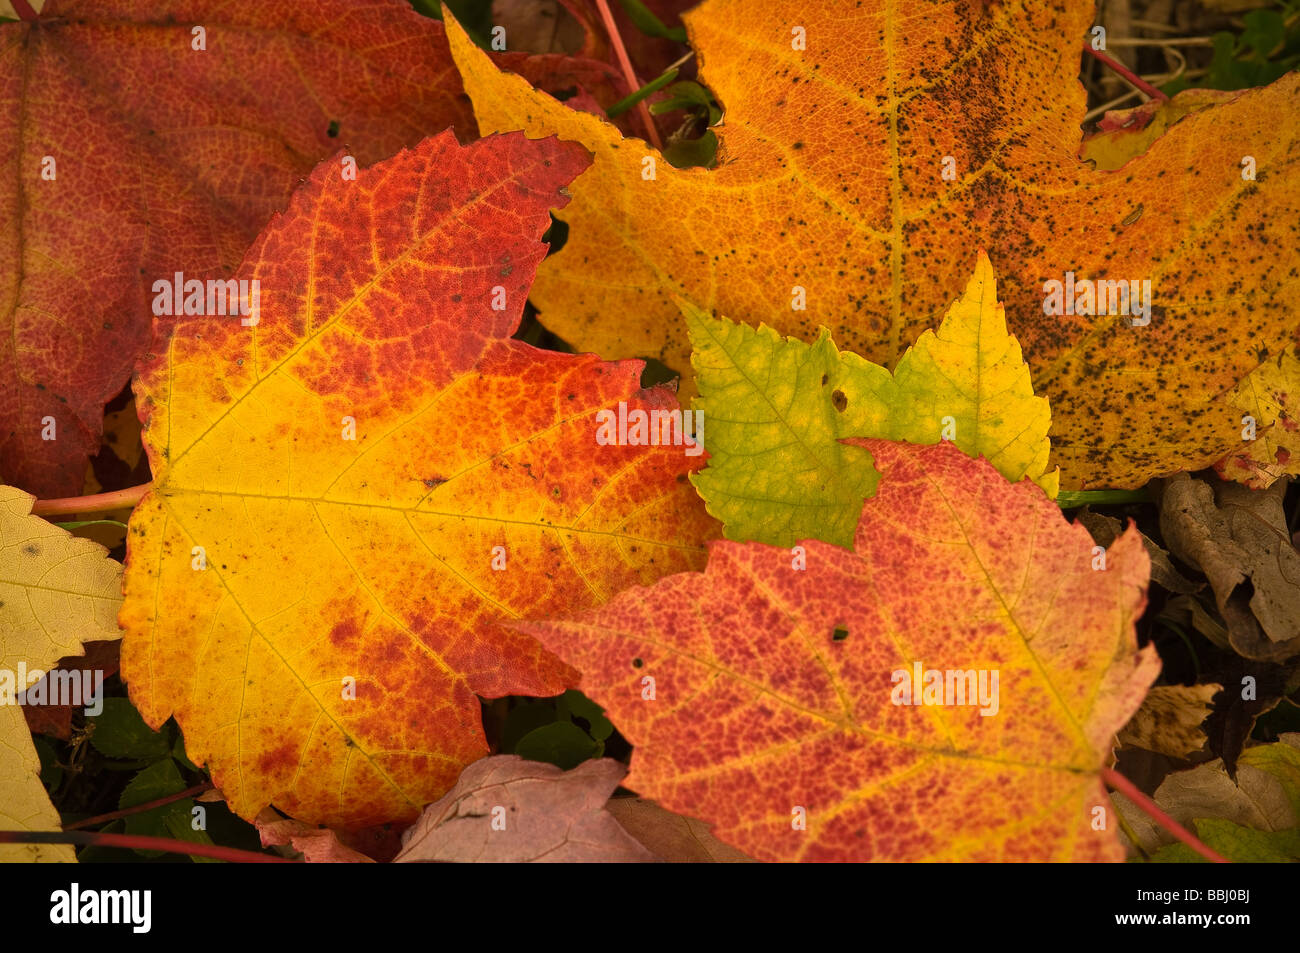 Nahaufnahme des gefallenen Ahorn Blätter im Herbst Niagara Falls Ontario Kanada Stockfoto